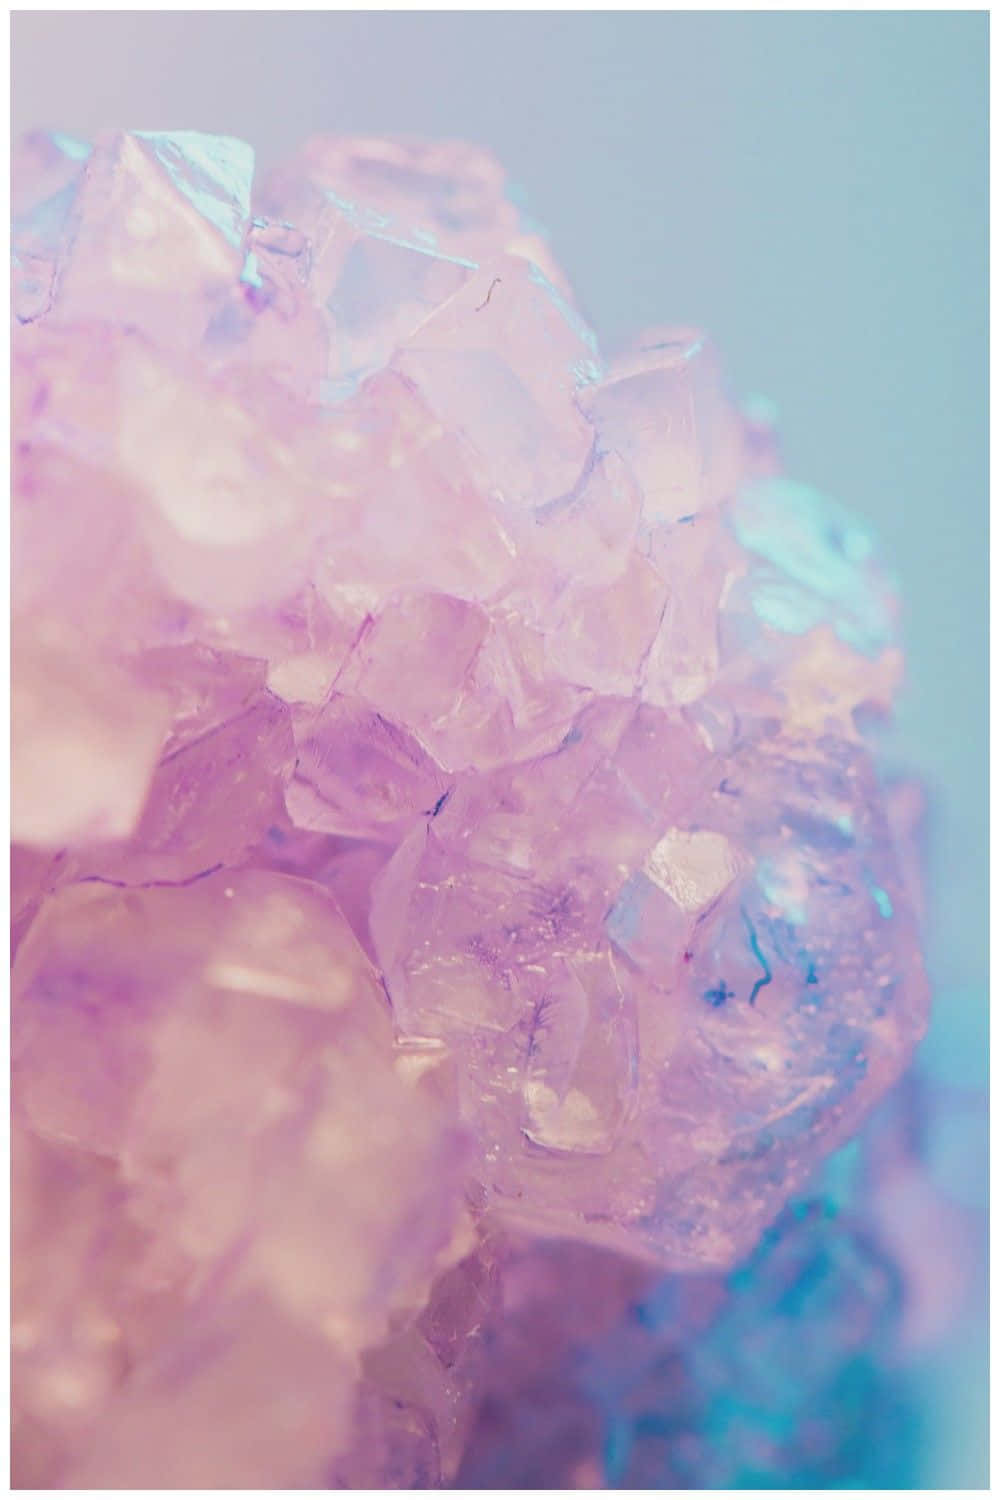 Download Aesthetic Crystal Wallpaper | Wallpapers.com